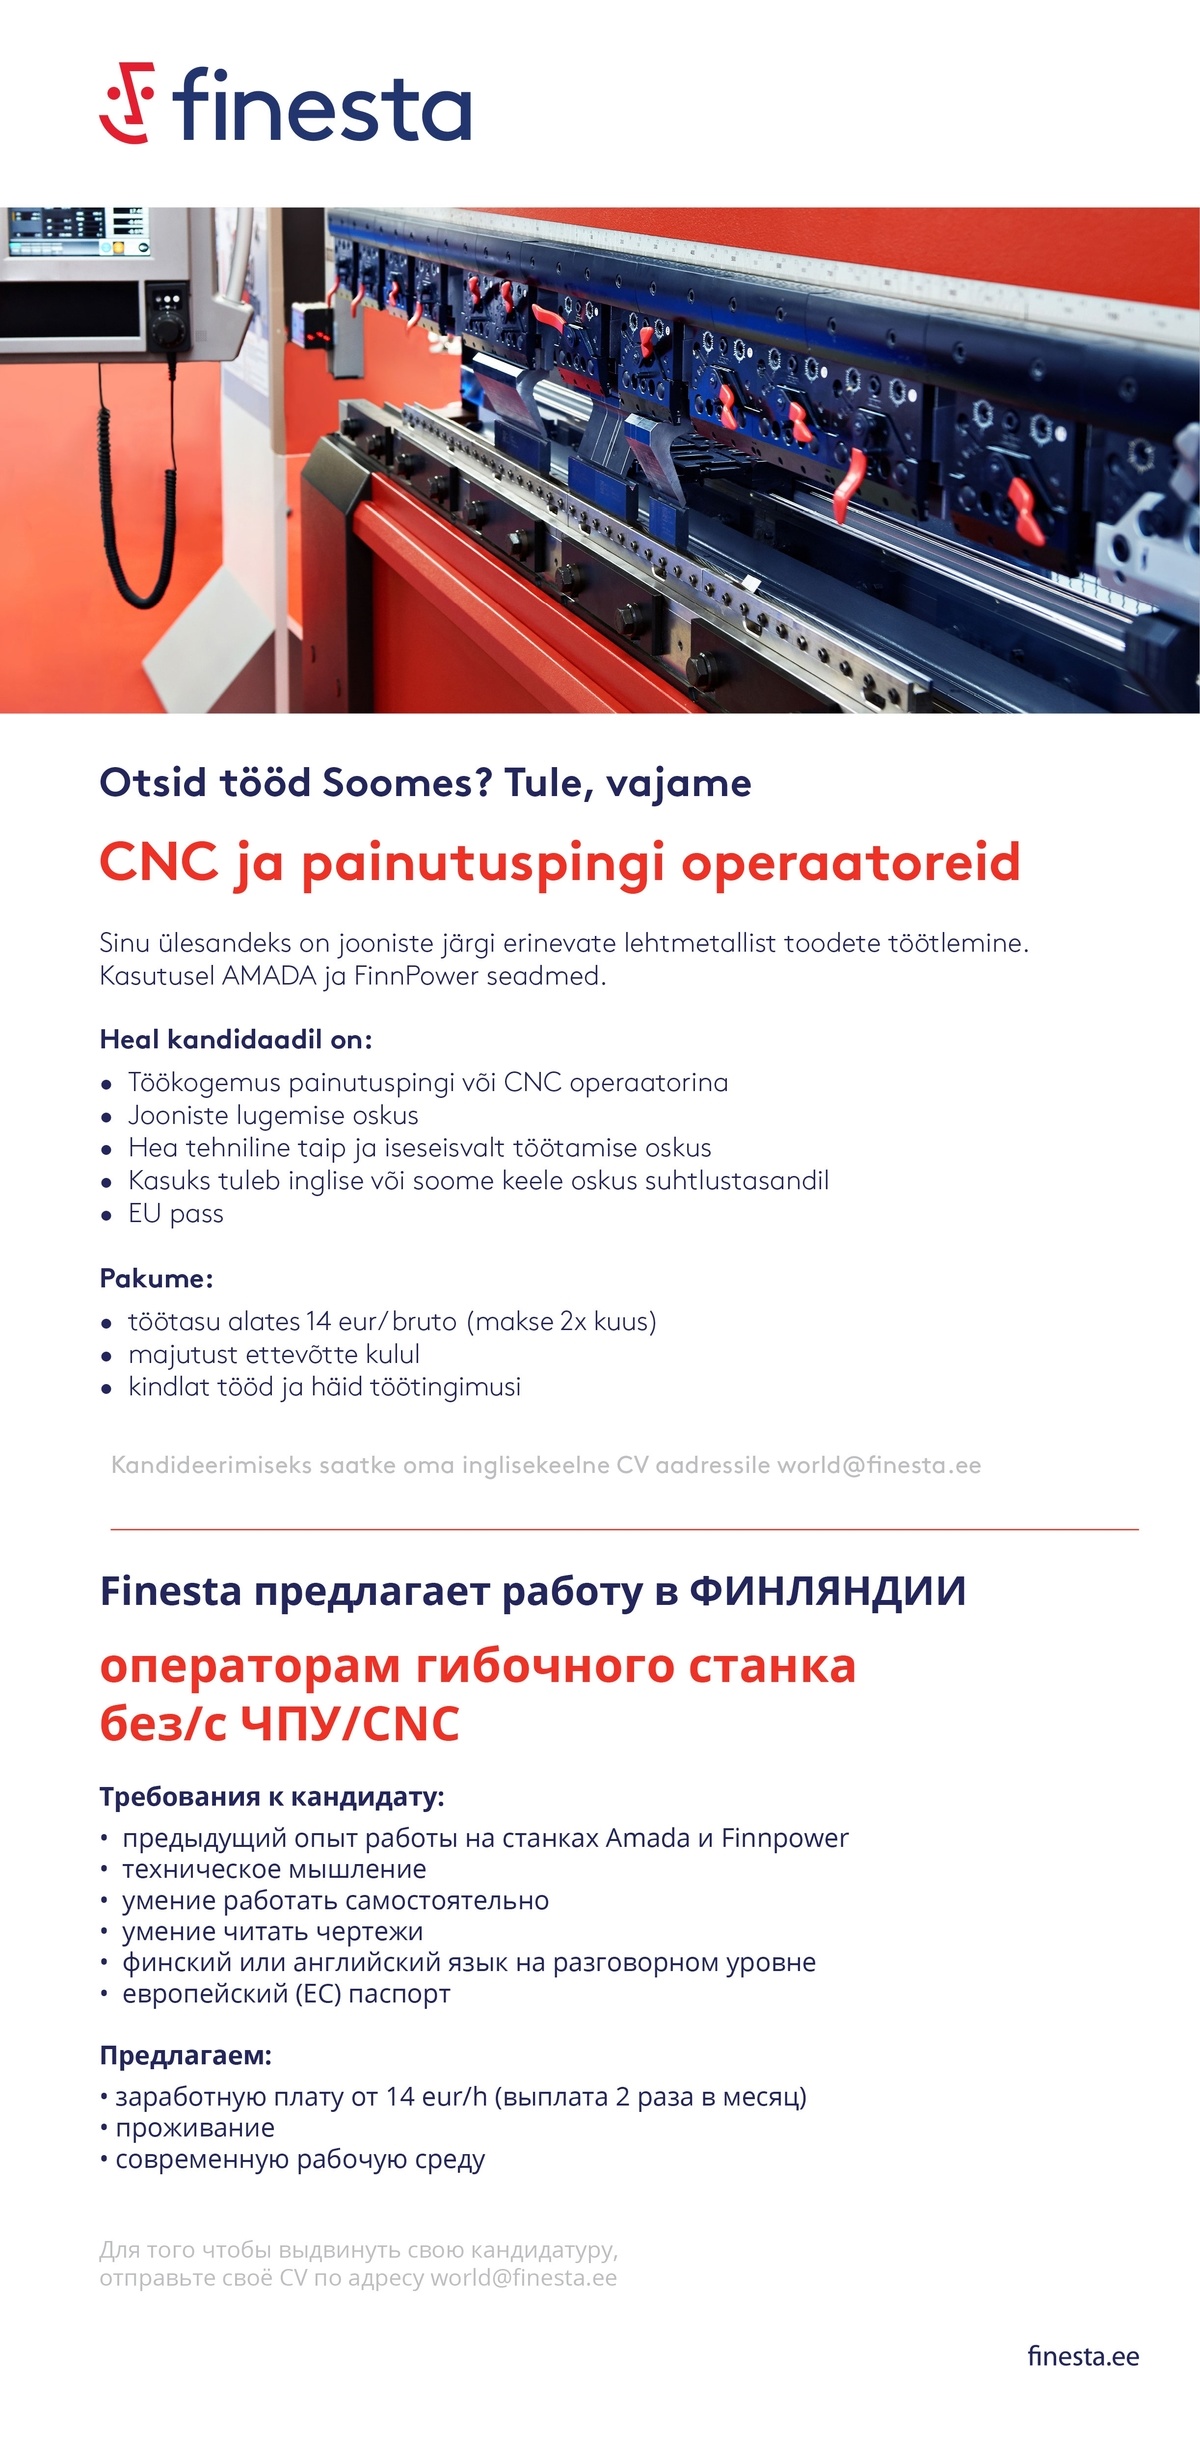 Finesta Baltic OÜ Painutuspingi operaator / Oператор гибочного станка